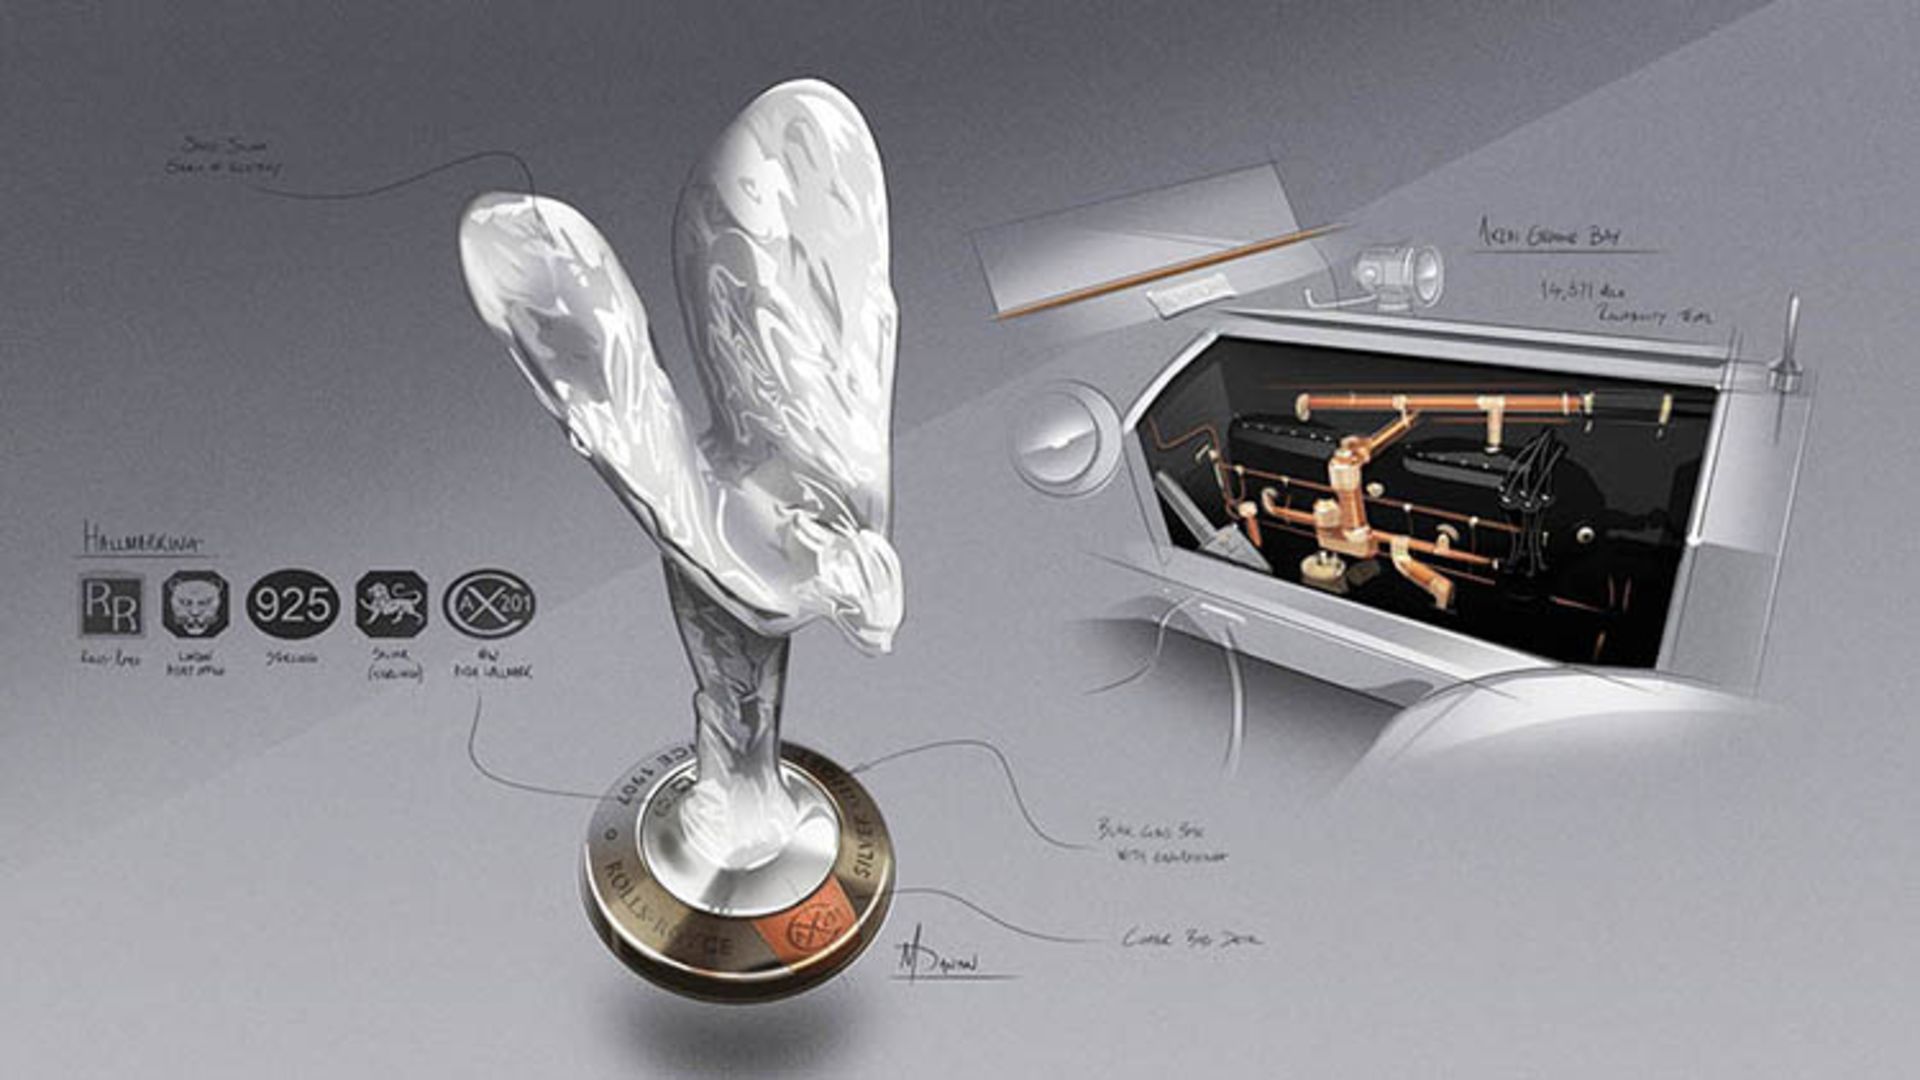  Rolls-Royce Silver Ghost / رولزرویس سیلور گوست 